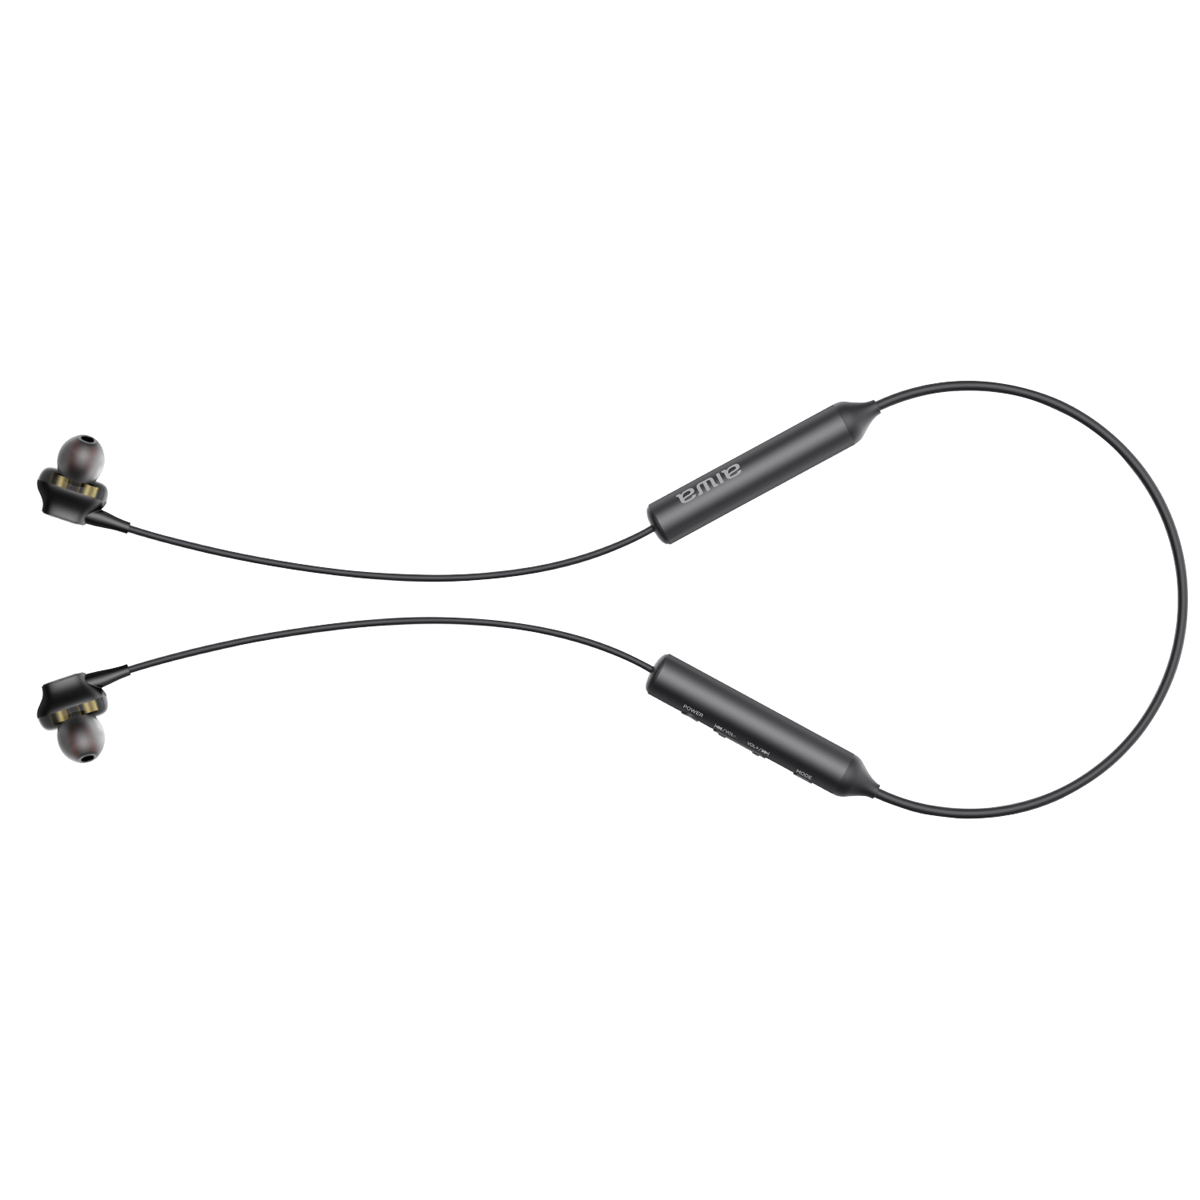 AIWA ESTBT-450BK, Neckband Kopfhörer Schwarz Bluetooth